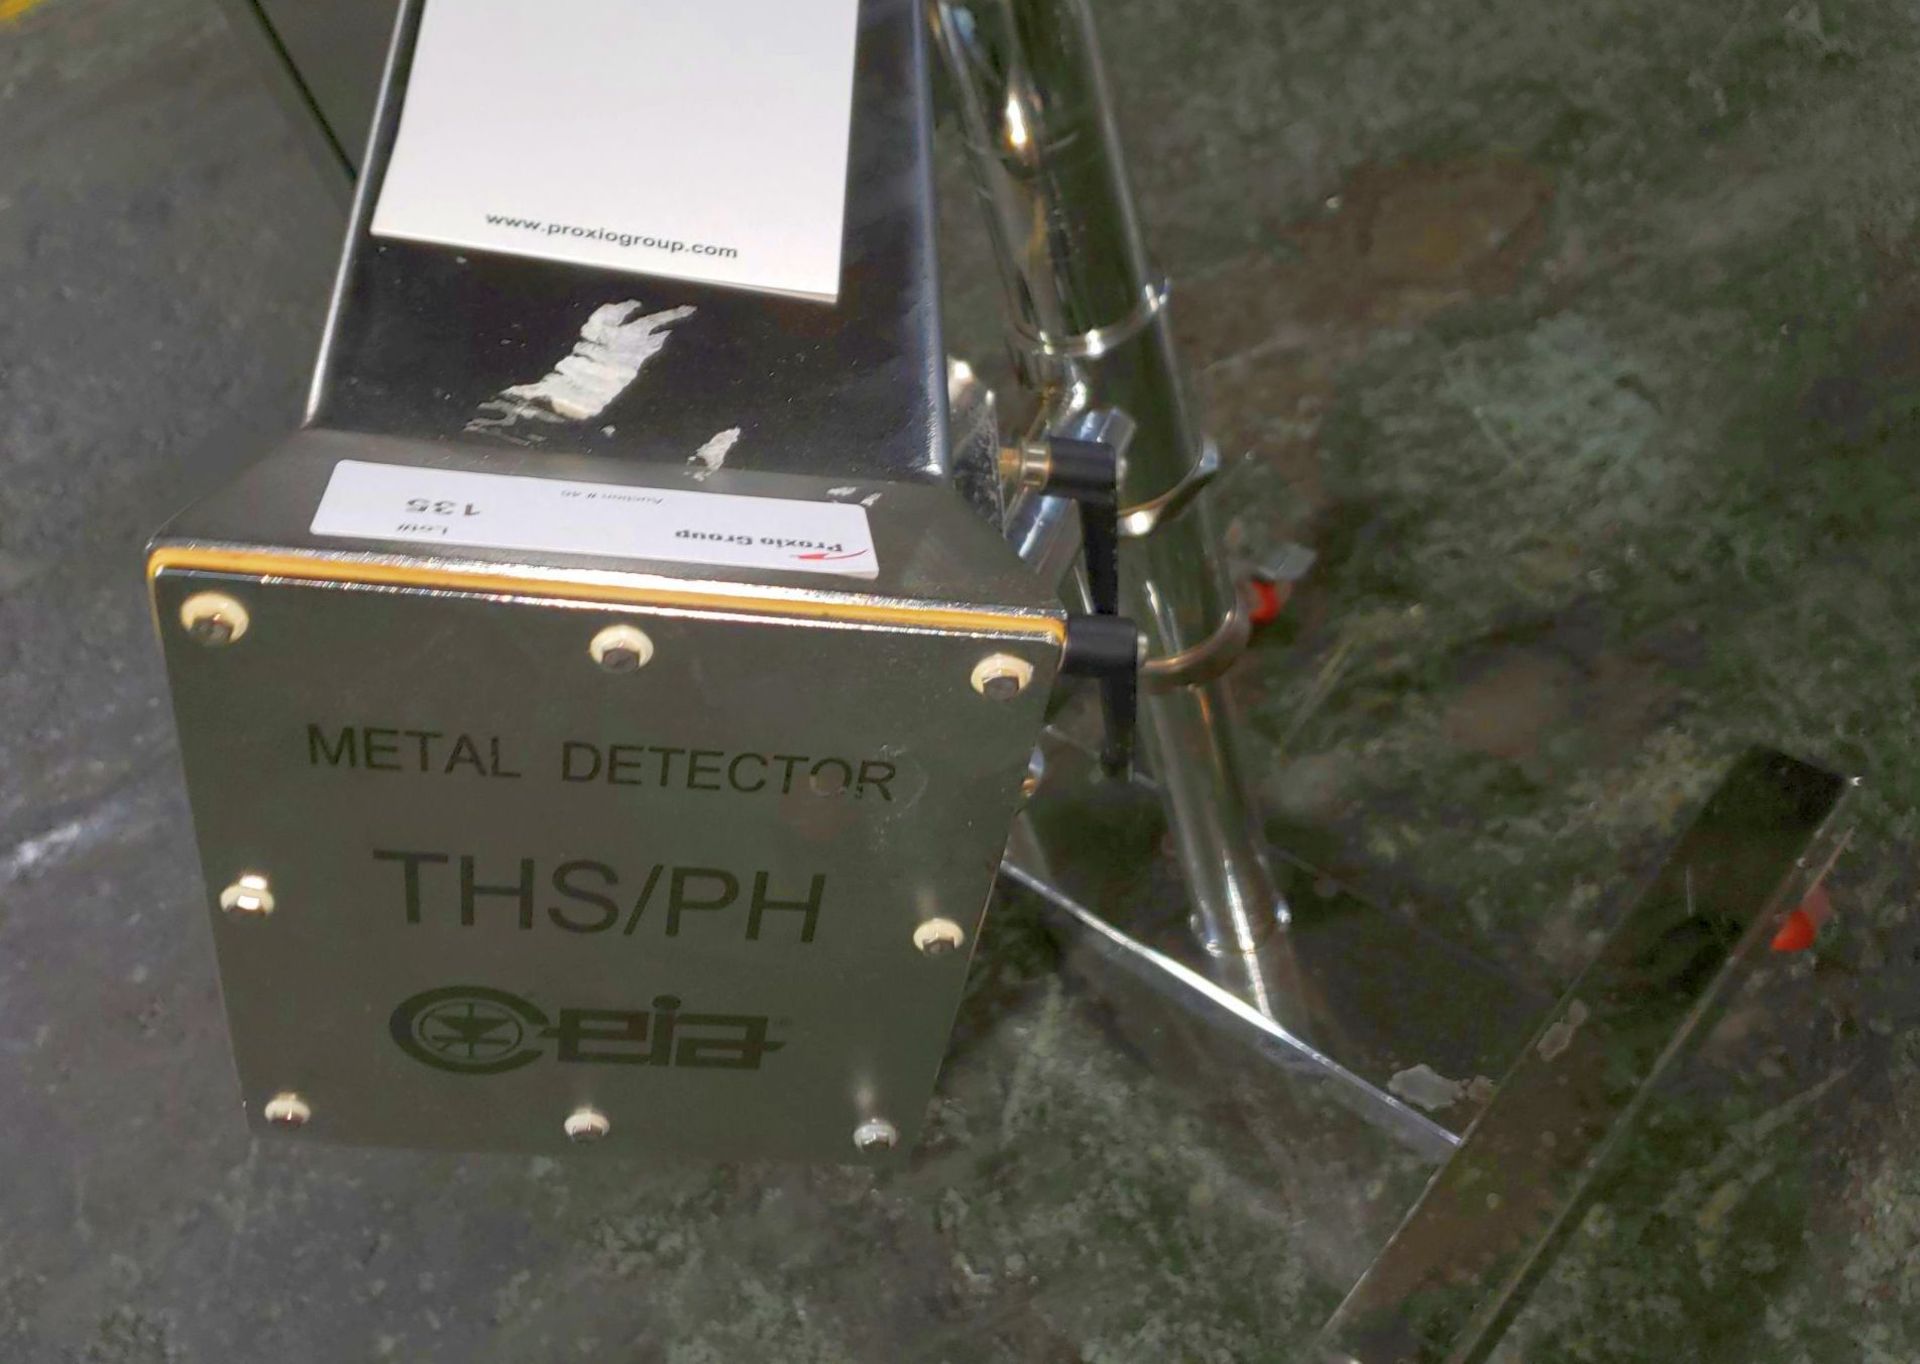 Ceia Metal Detector, Model THS/PH21 - Image 5 of 5